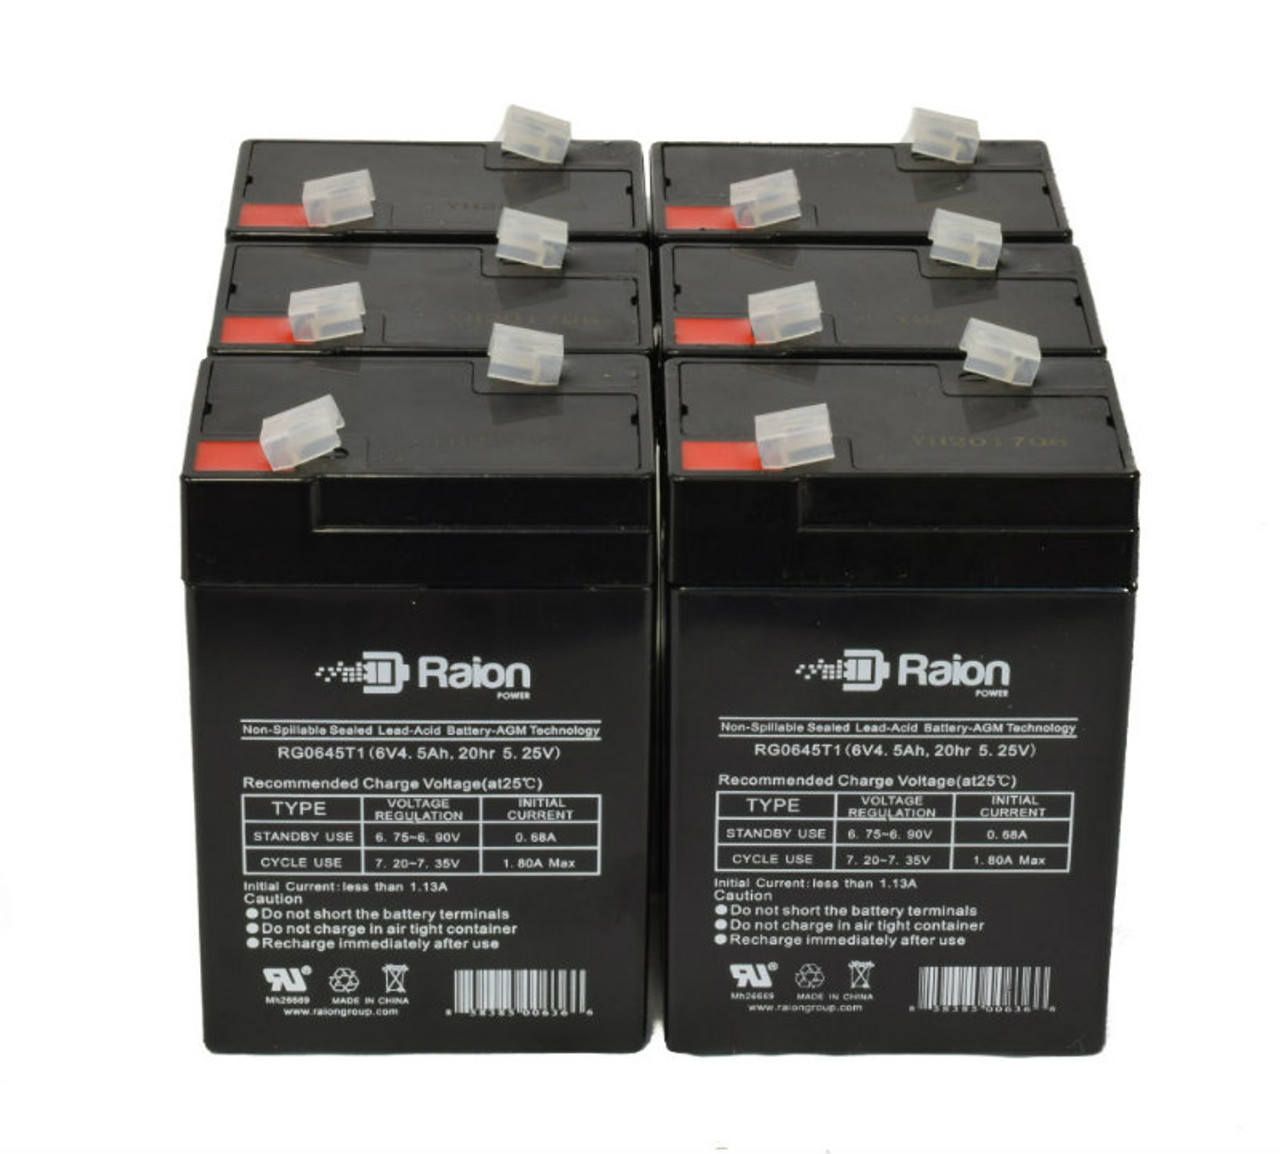 Raion Power 6 Volt 4.5Ah RG0645T1 Replacement Battery for Sonnenschein A206/3.8SK - 6 Pack